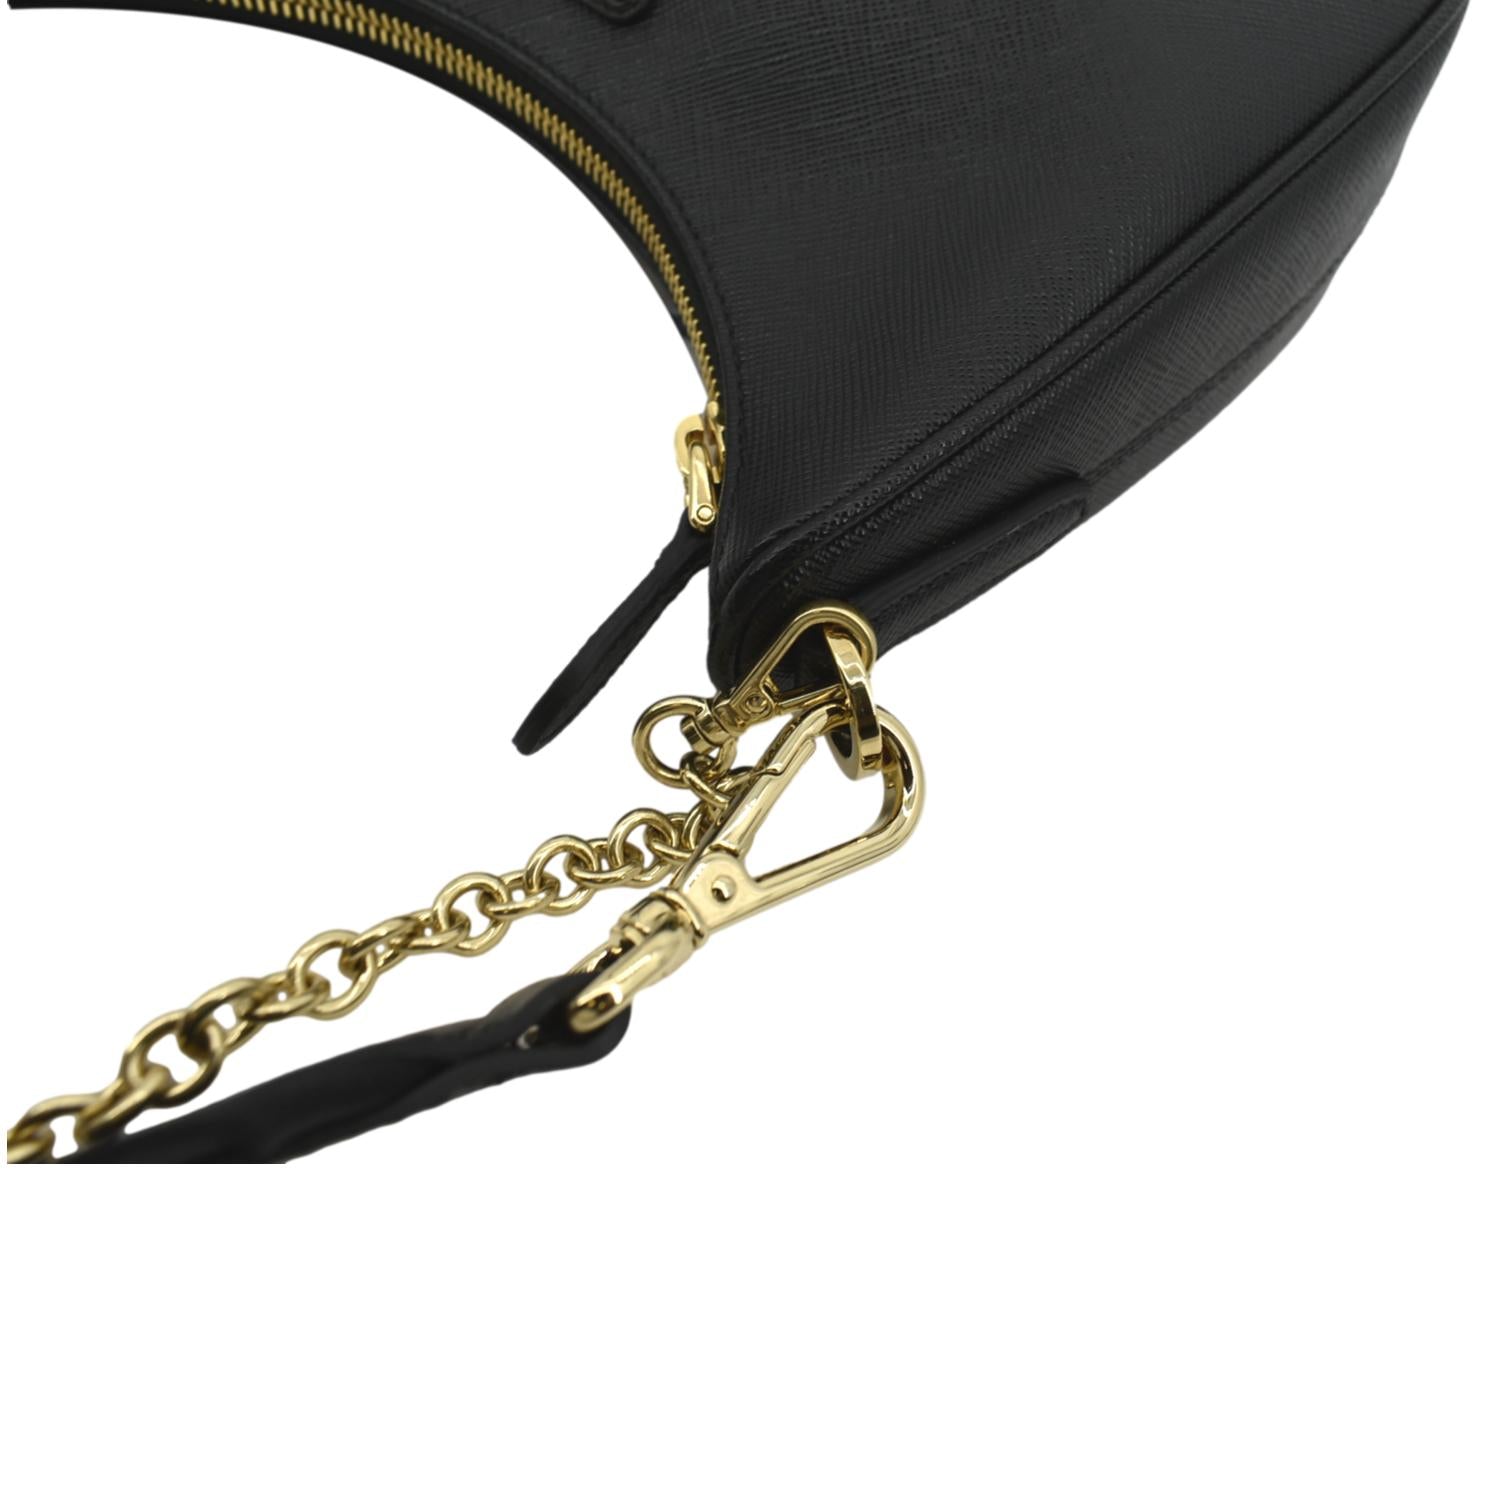 Prada Re-Edition 2005 Shoulder Bag Saffiano Leather Small Black